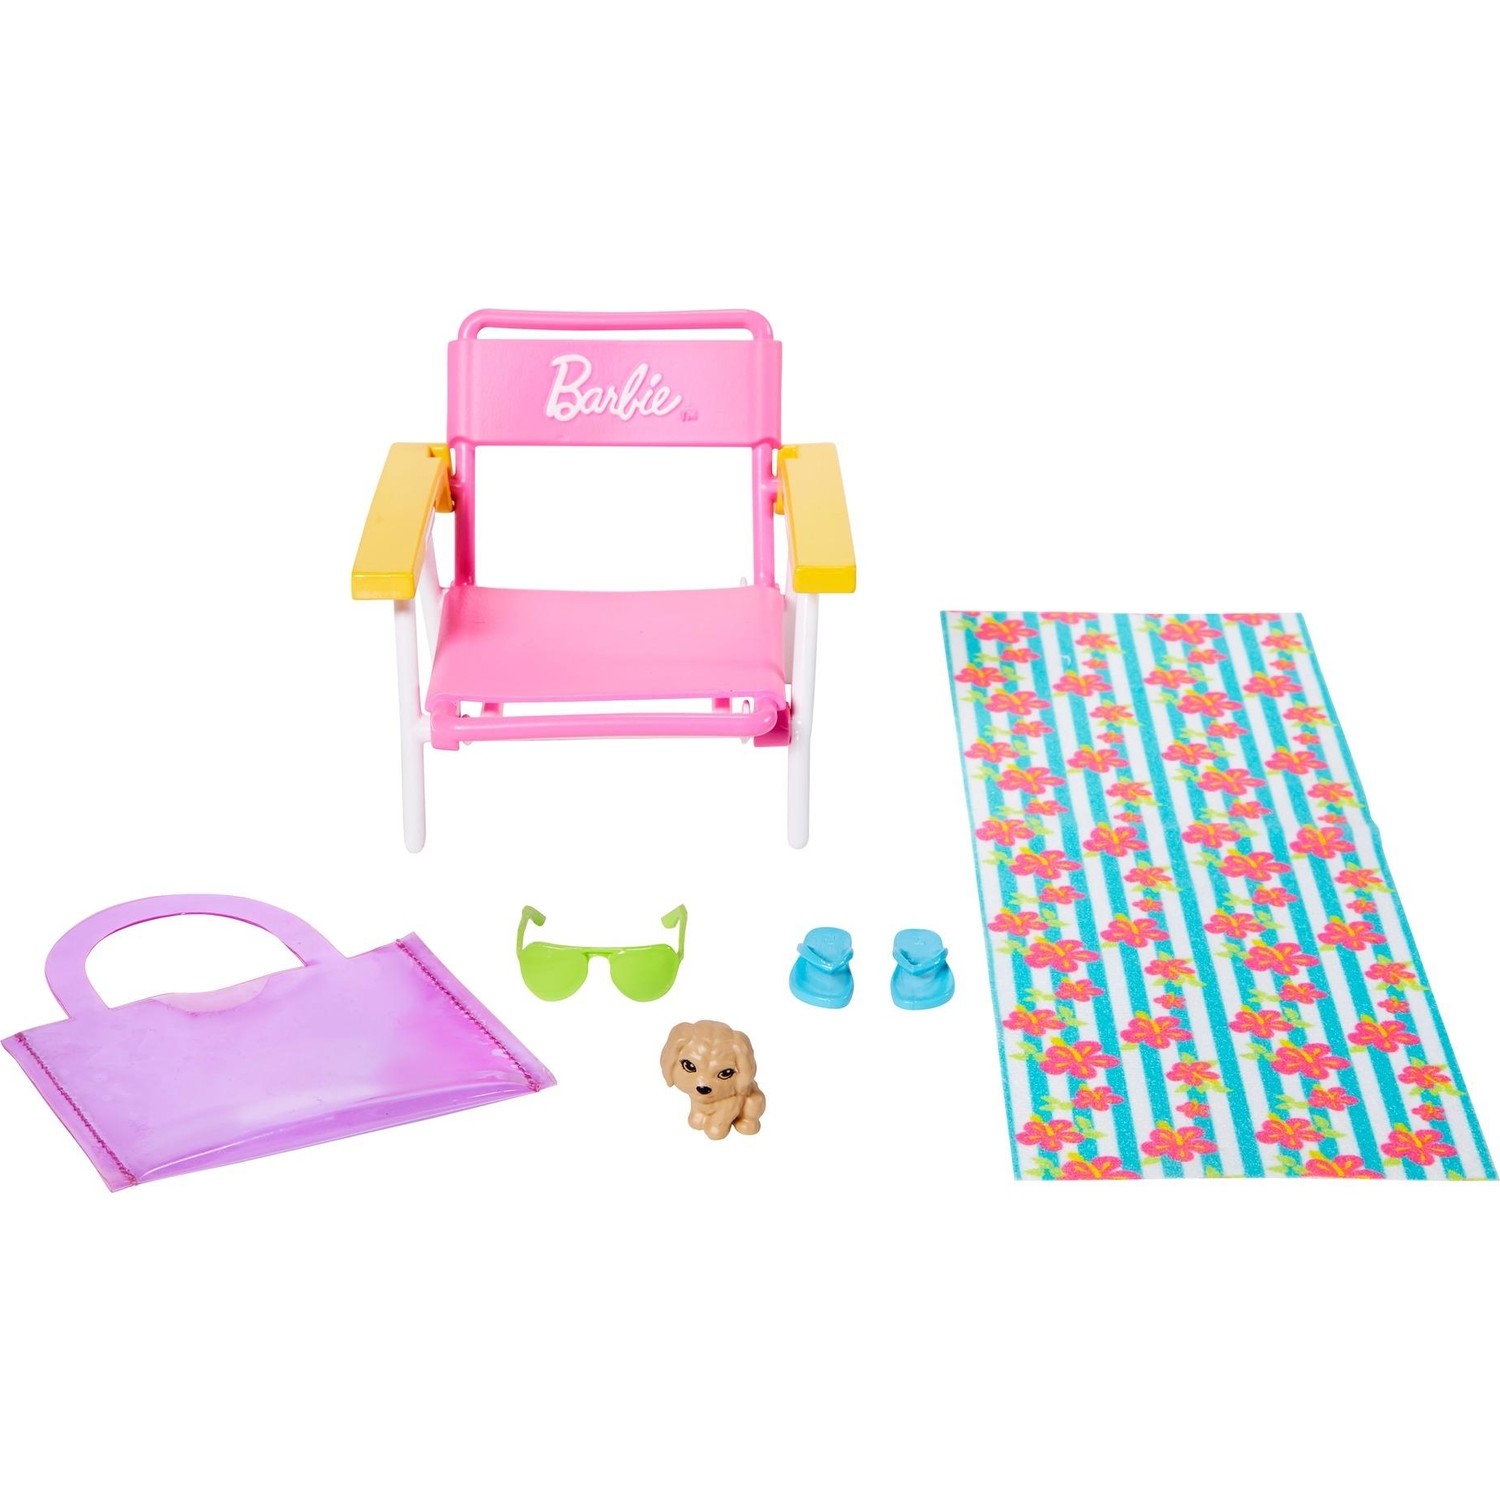 Игровой набор Barbie Home Accessory Packs GRG56